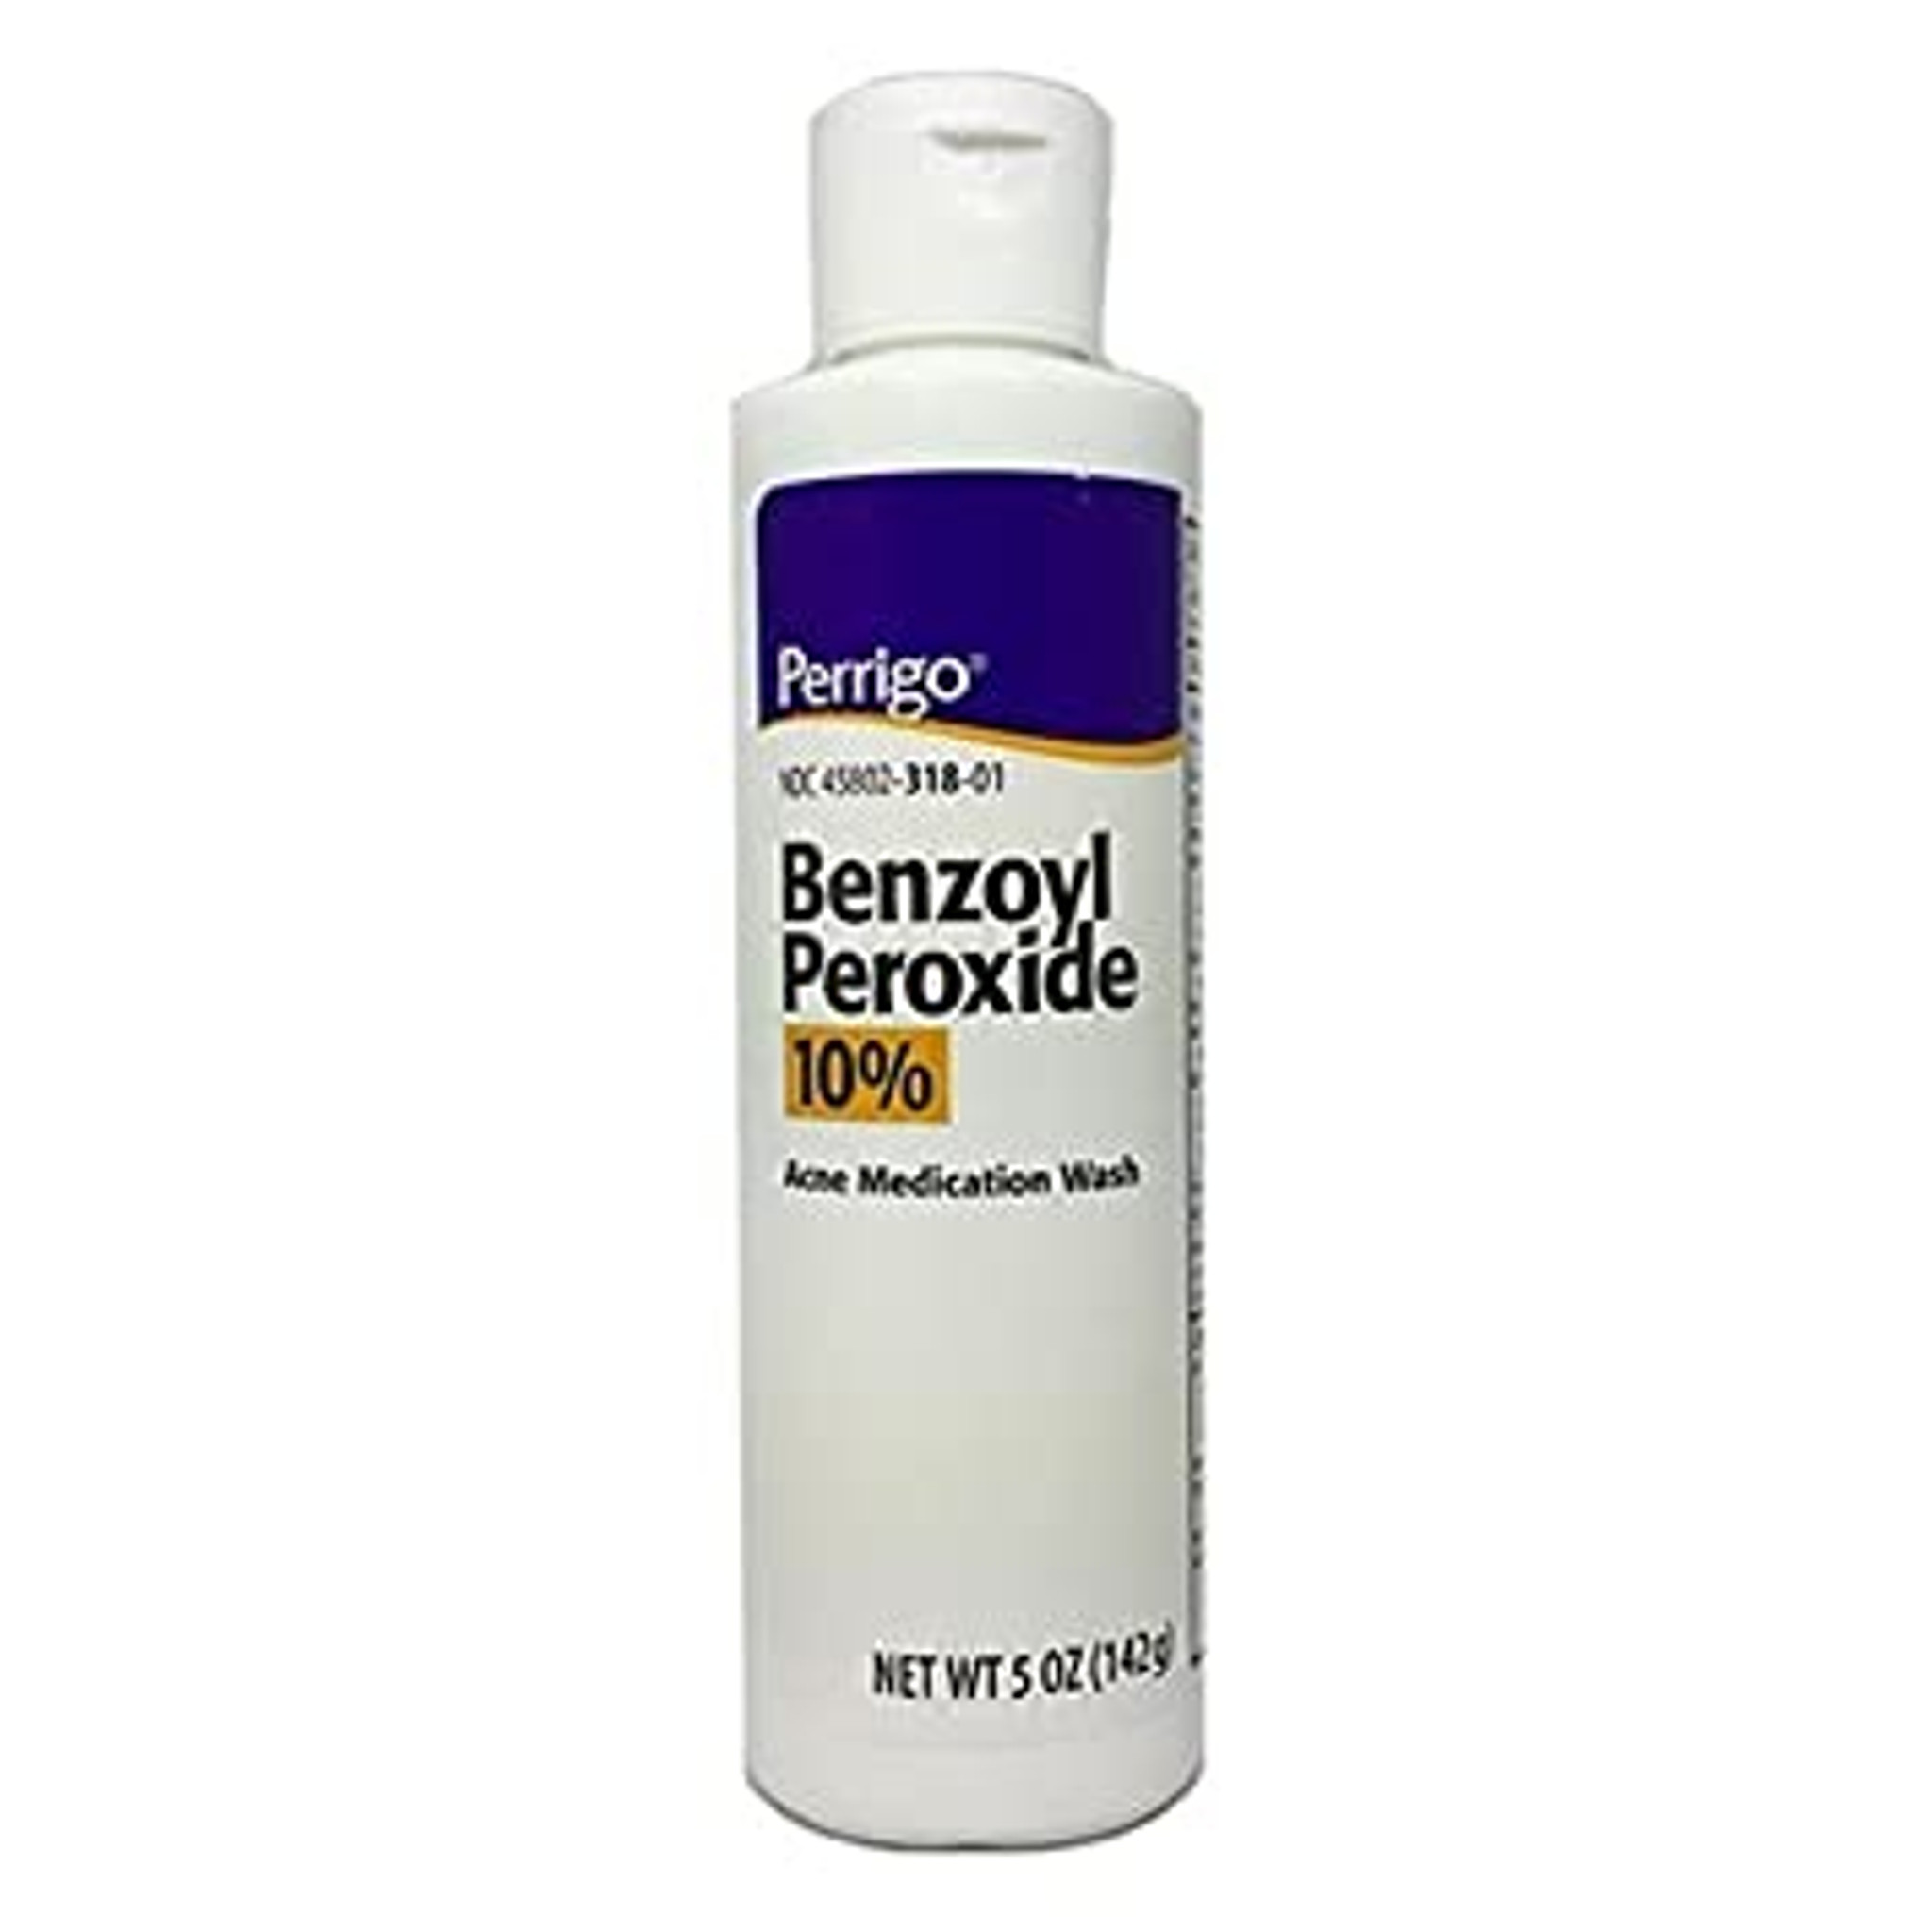 Perrigo 10% Benzoyl Peroxide Acne Medication Face Wash 5 Oz